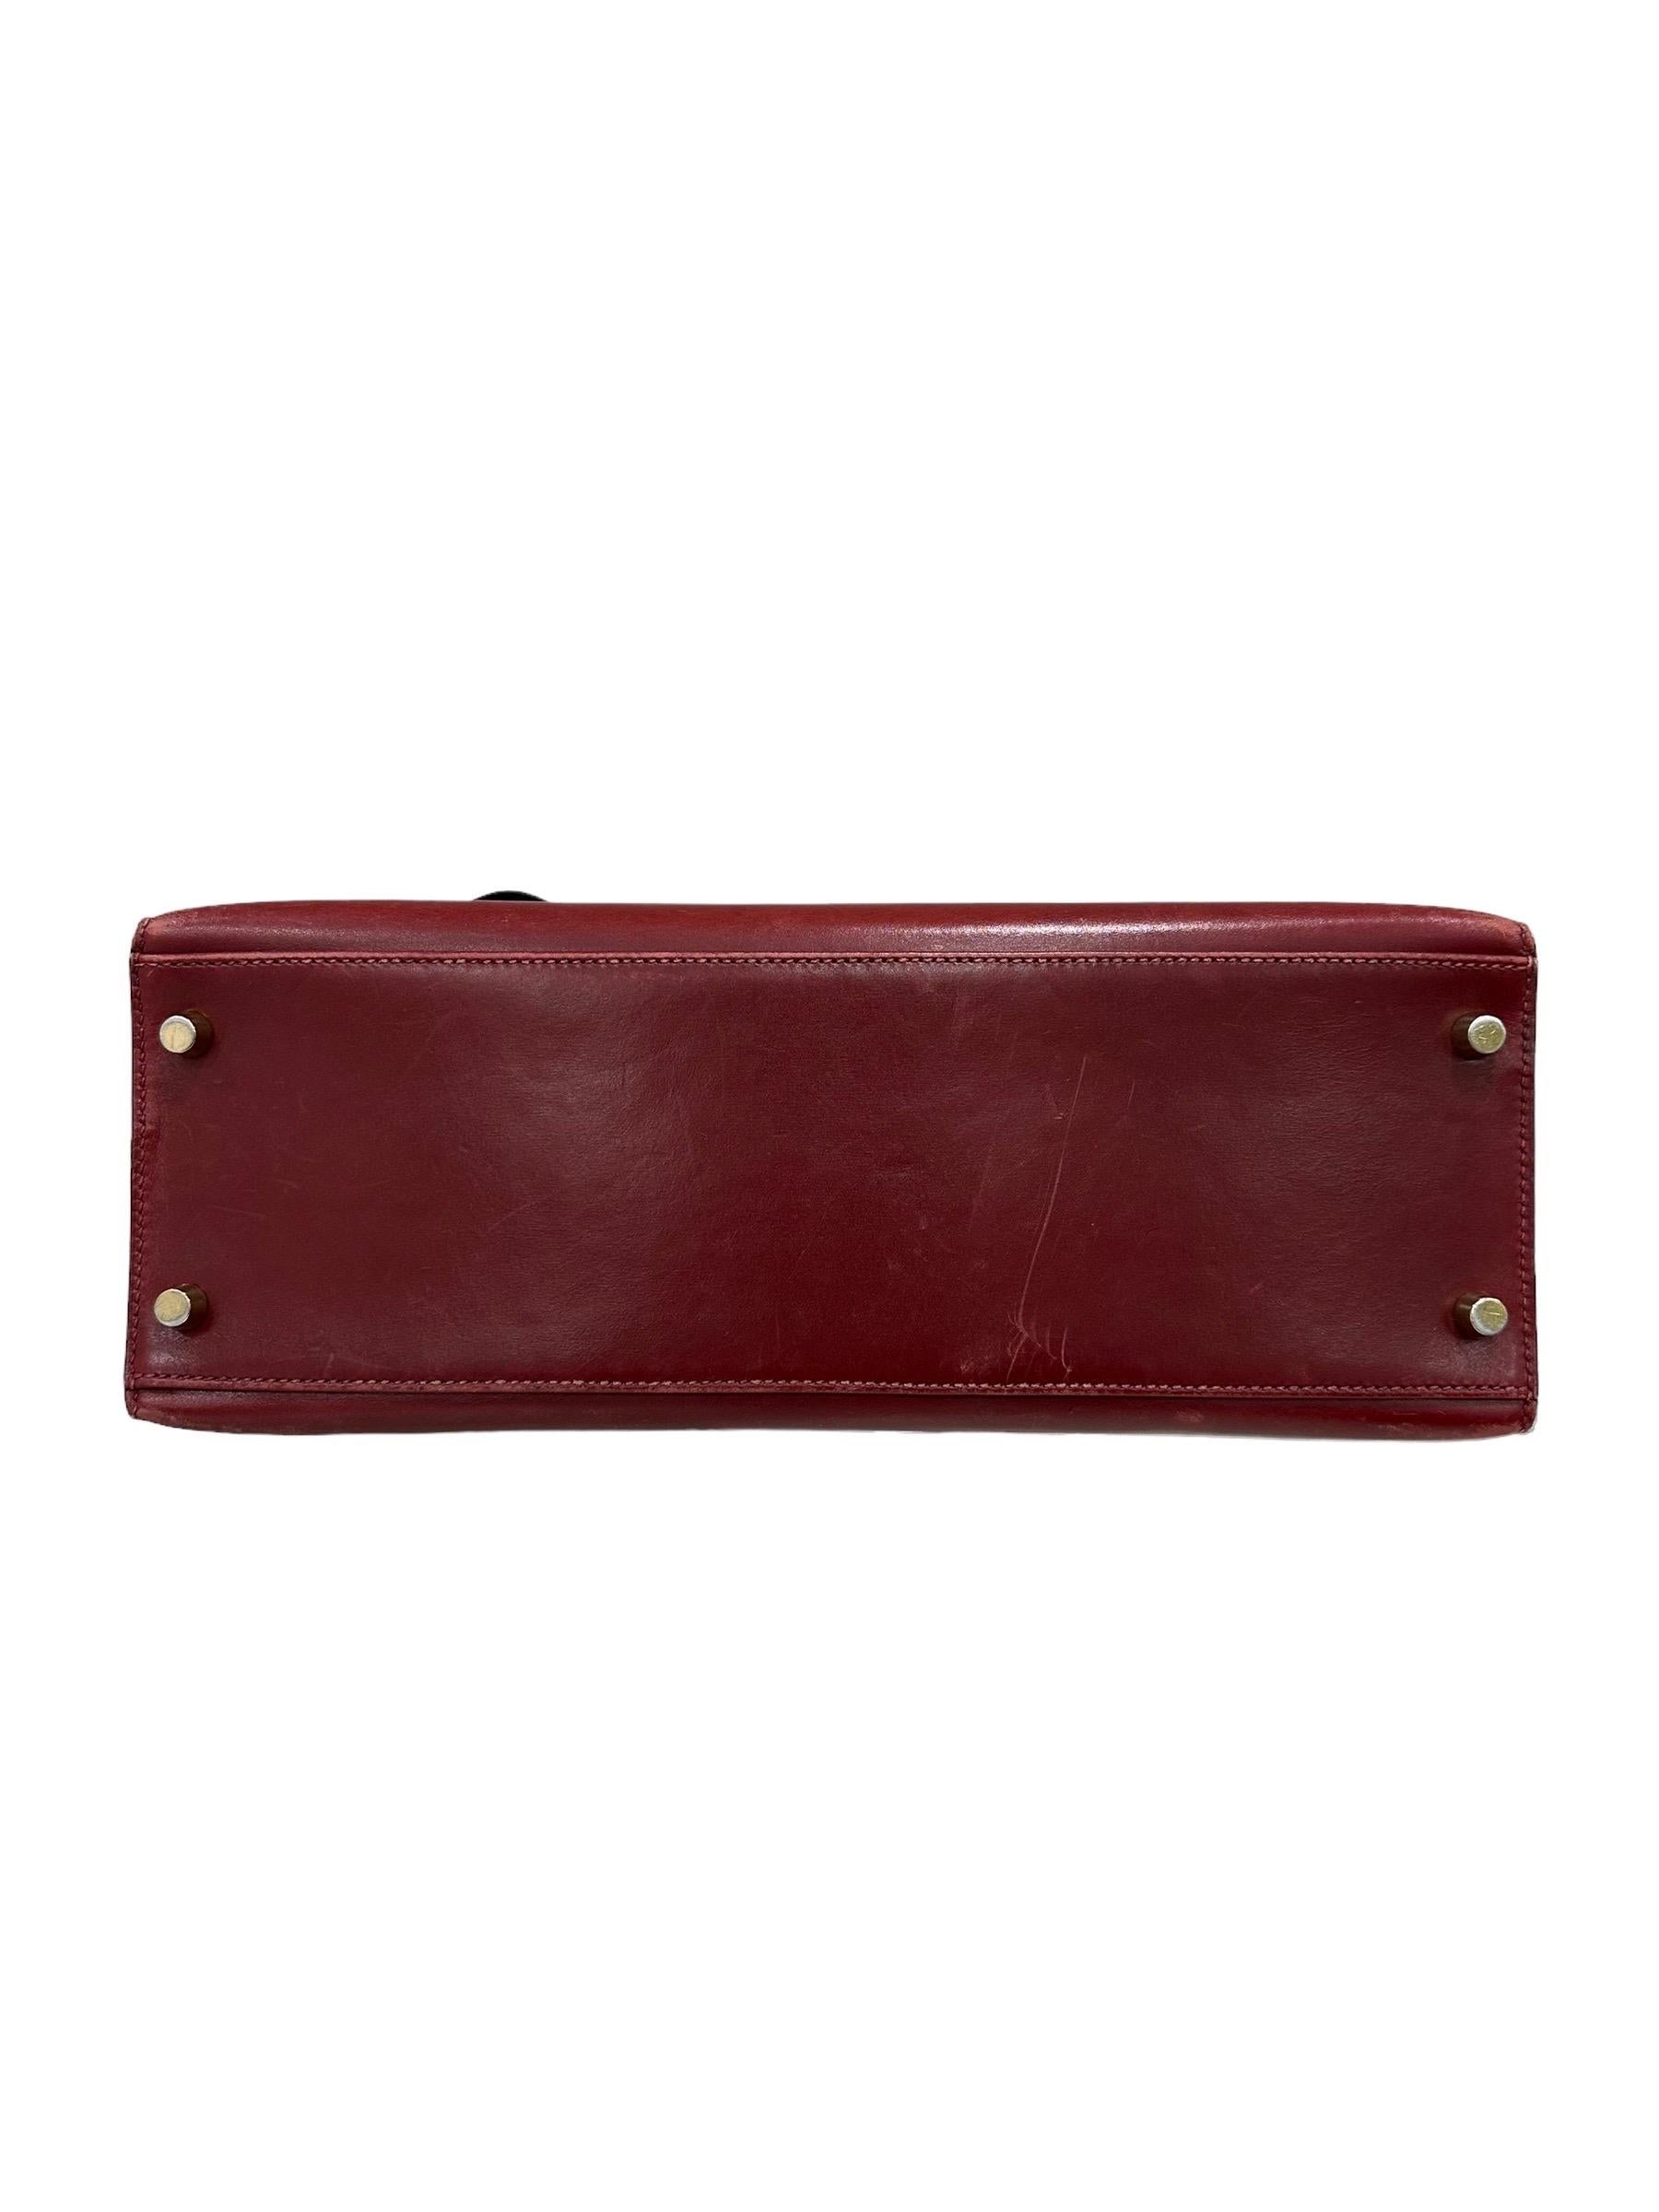 2008 Hermès Kelly 32 Box Calf Leather Rouge H Top Handle Bag 4